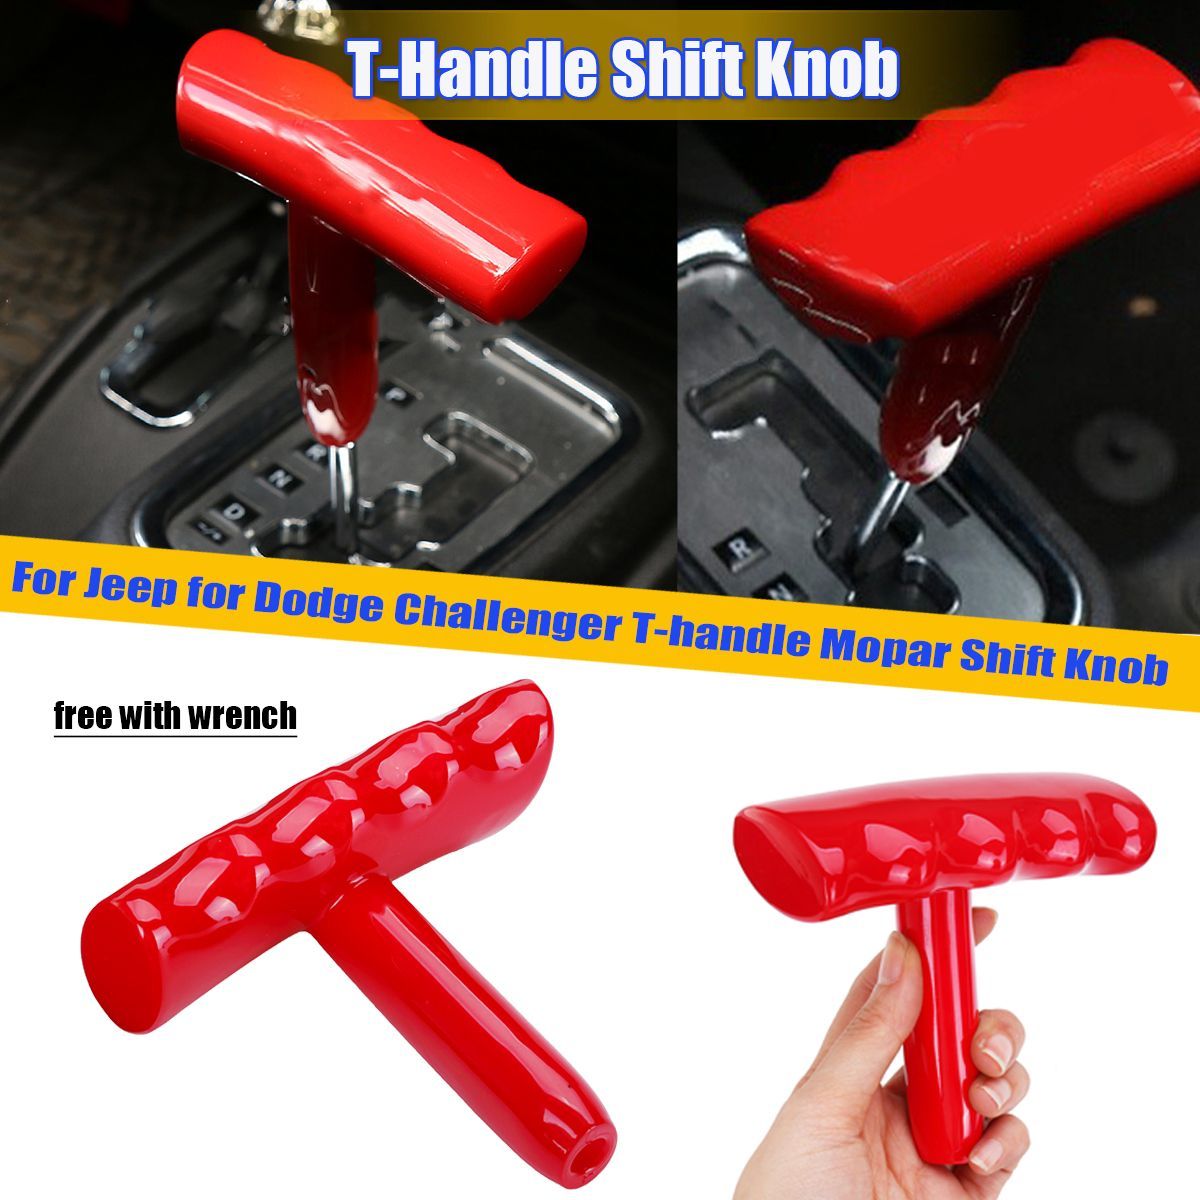 Gear-Shift-Knob-T-Handle-Car-Knob-Gear-Handle-Shifter-for-Dodge-Challenger-1517796